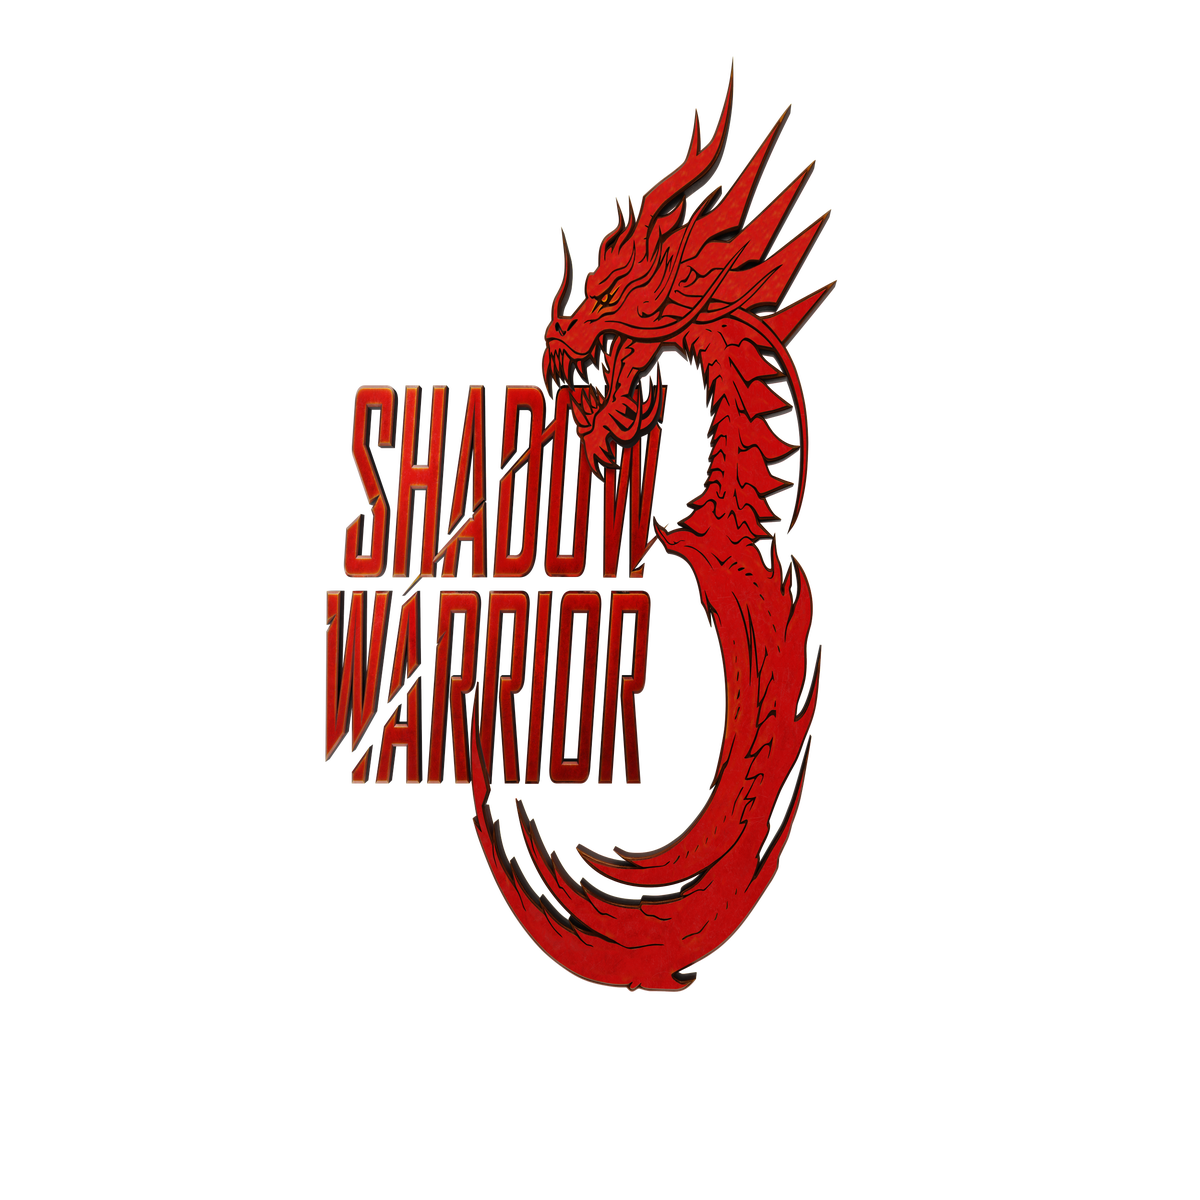 Shadow Warrior 3 first teaser trailer revealed - Polygon